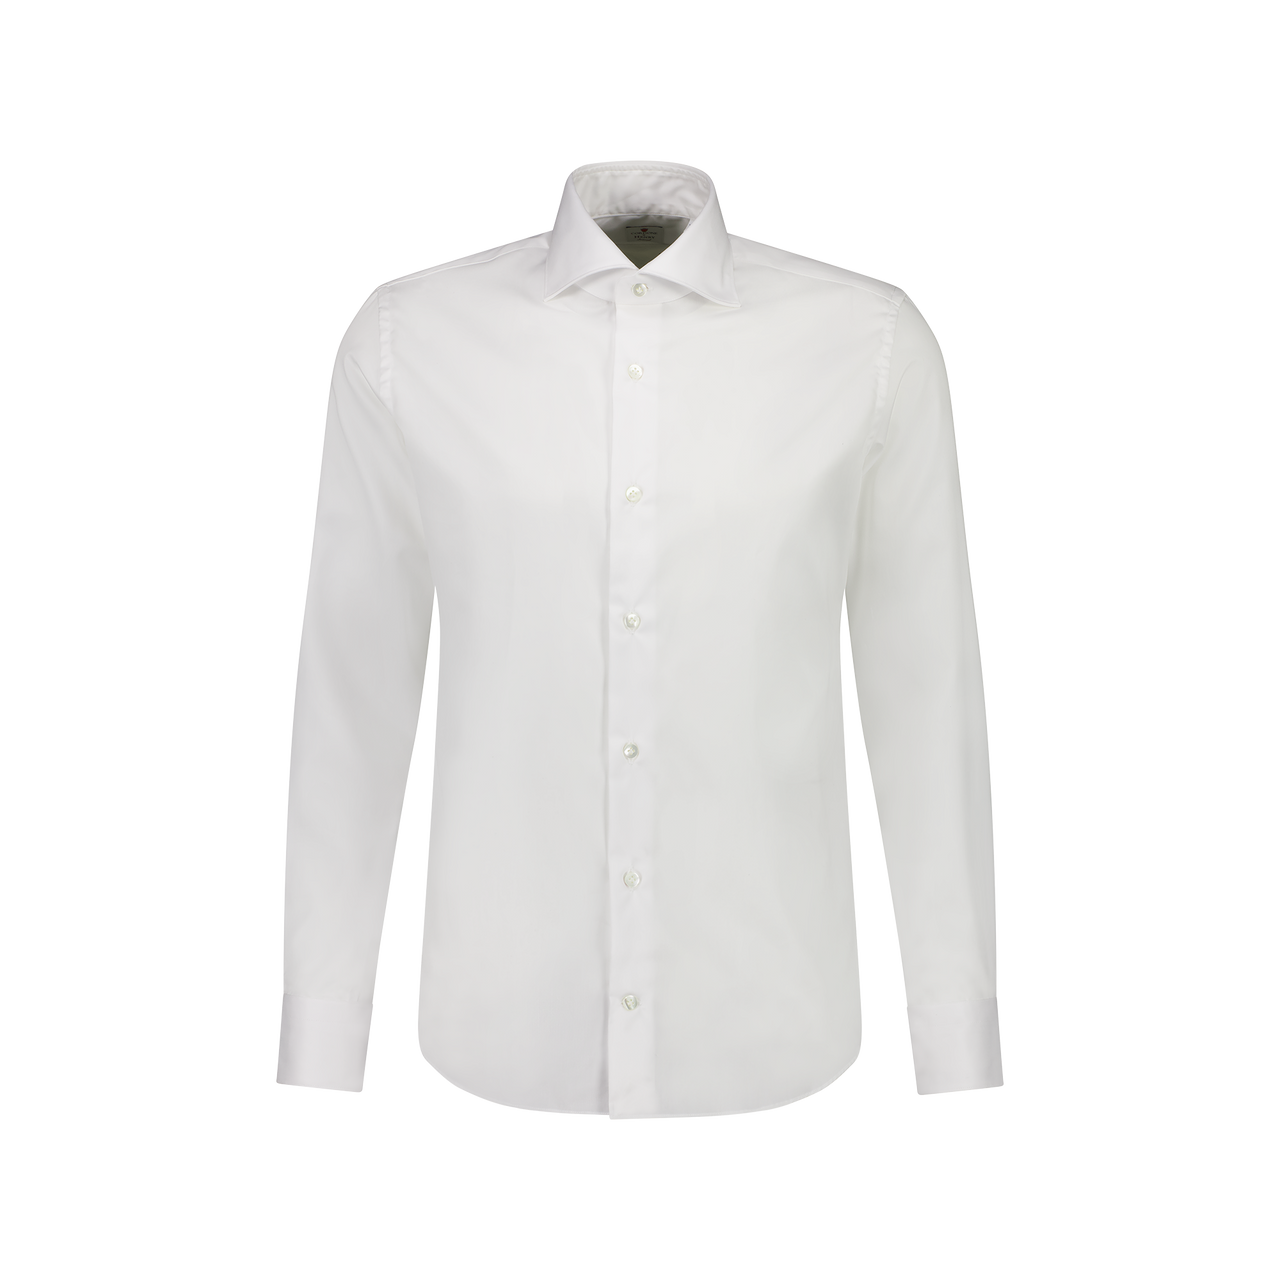 Cordone Elegance Max Shirt in WINTER WHITE